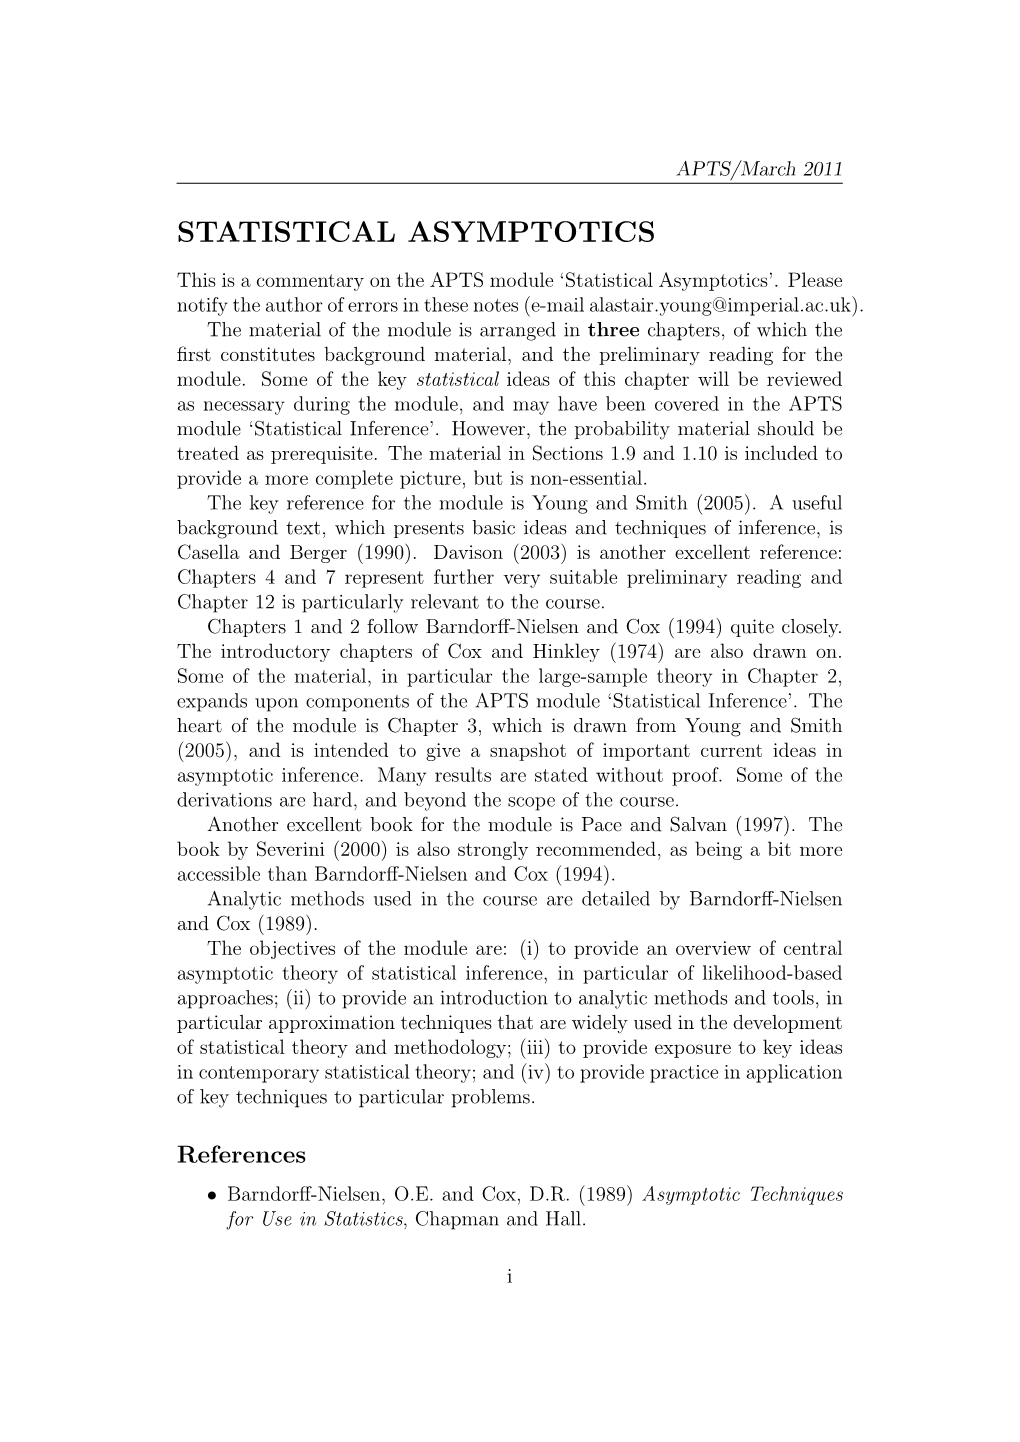 Statistical Asymptotics